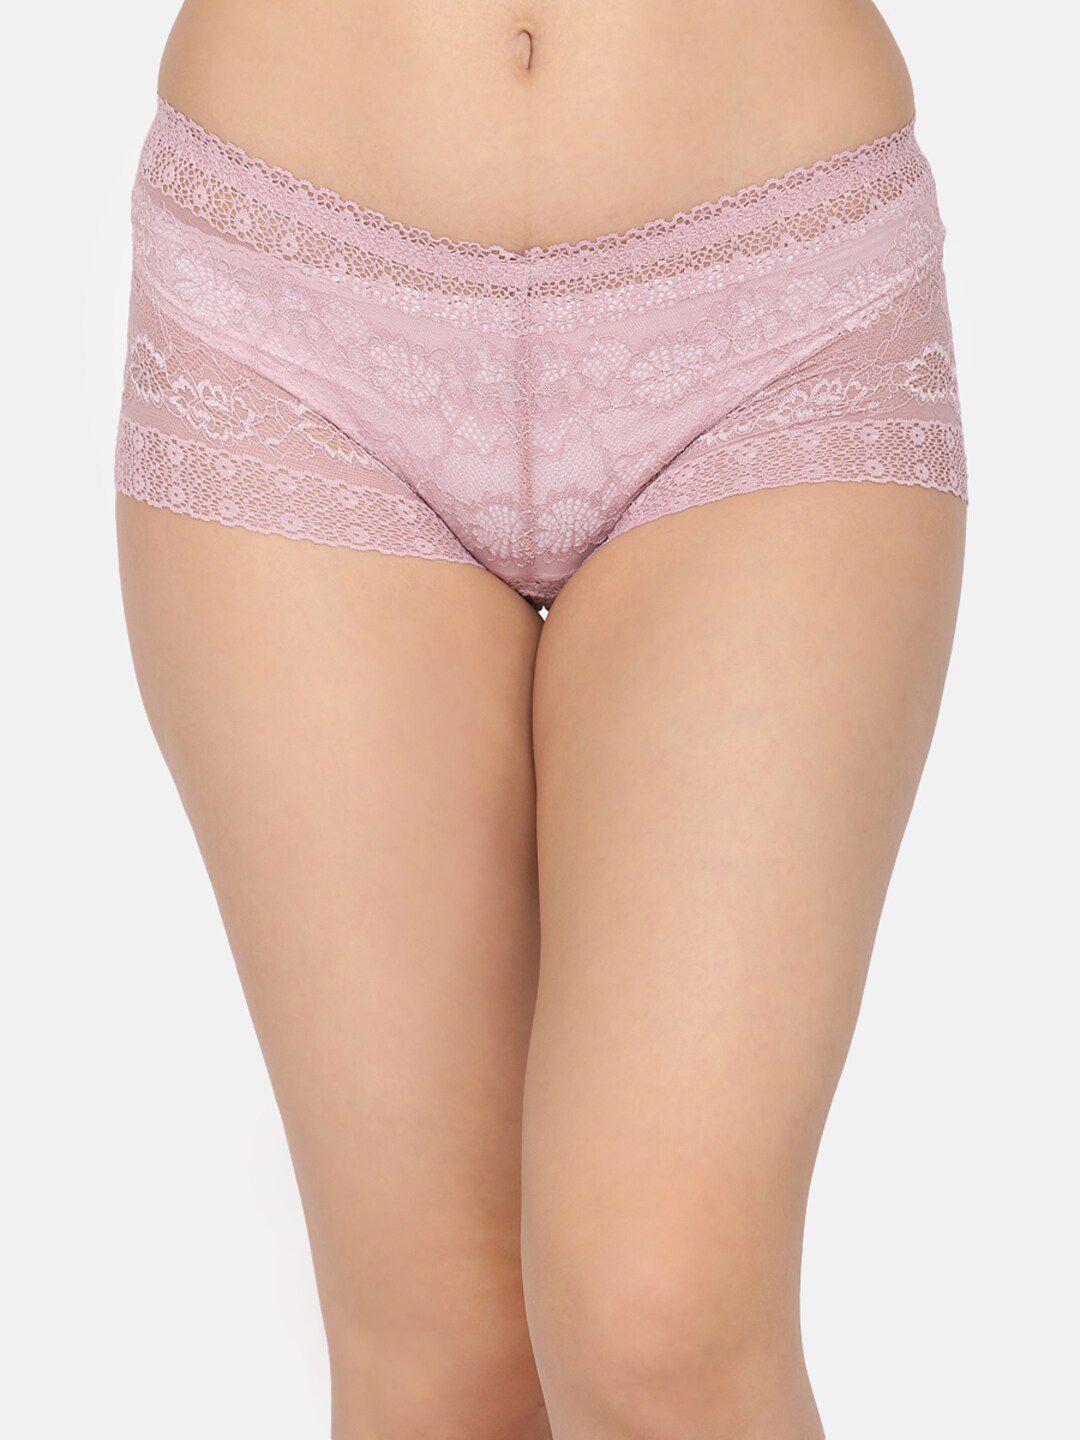 da intimo women pink lace boy shorts diu-300 peach-c20